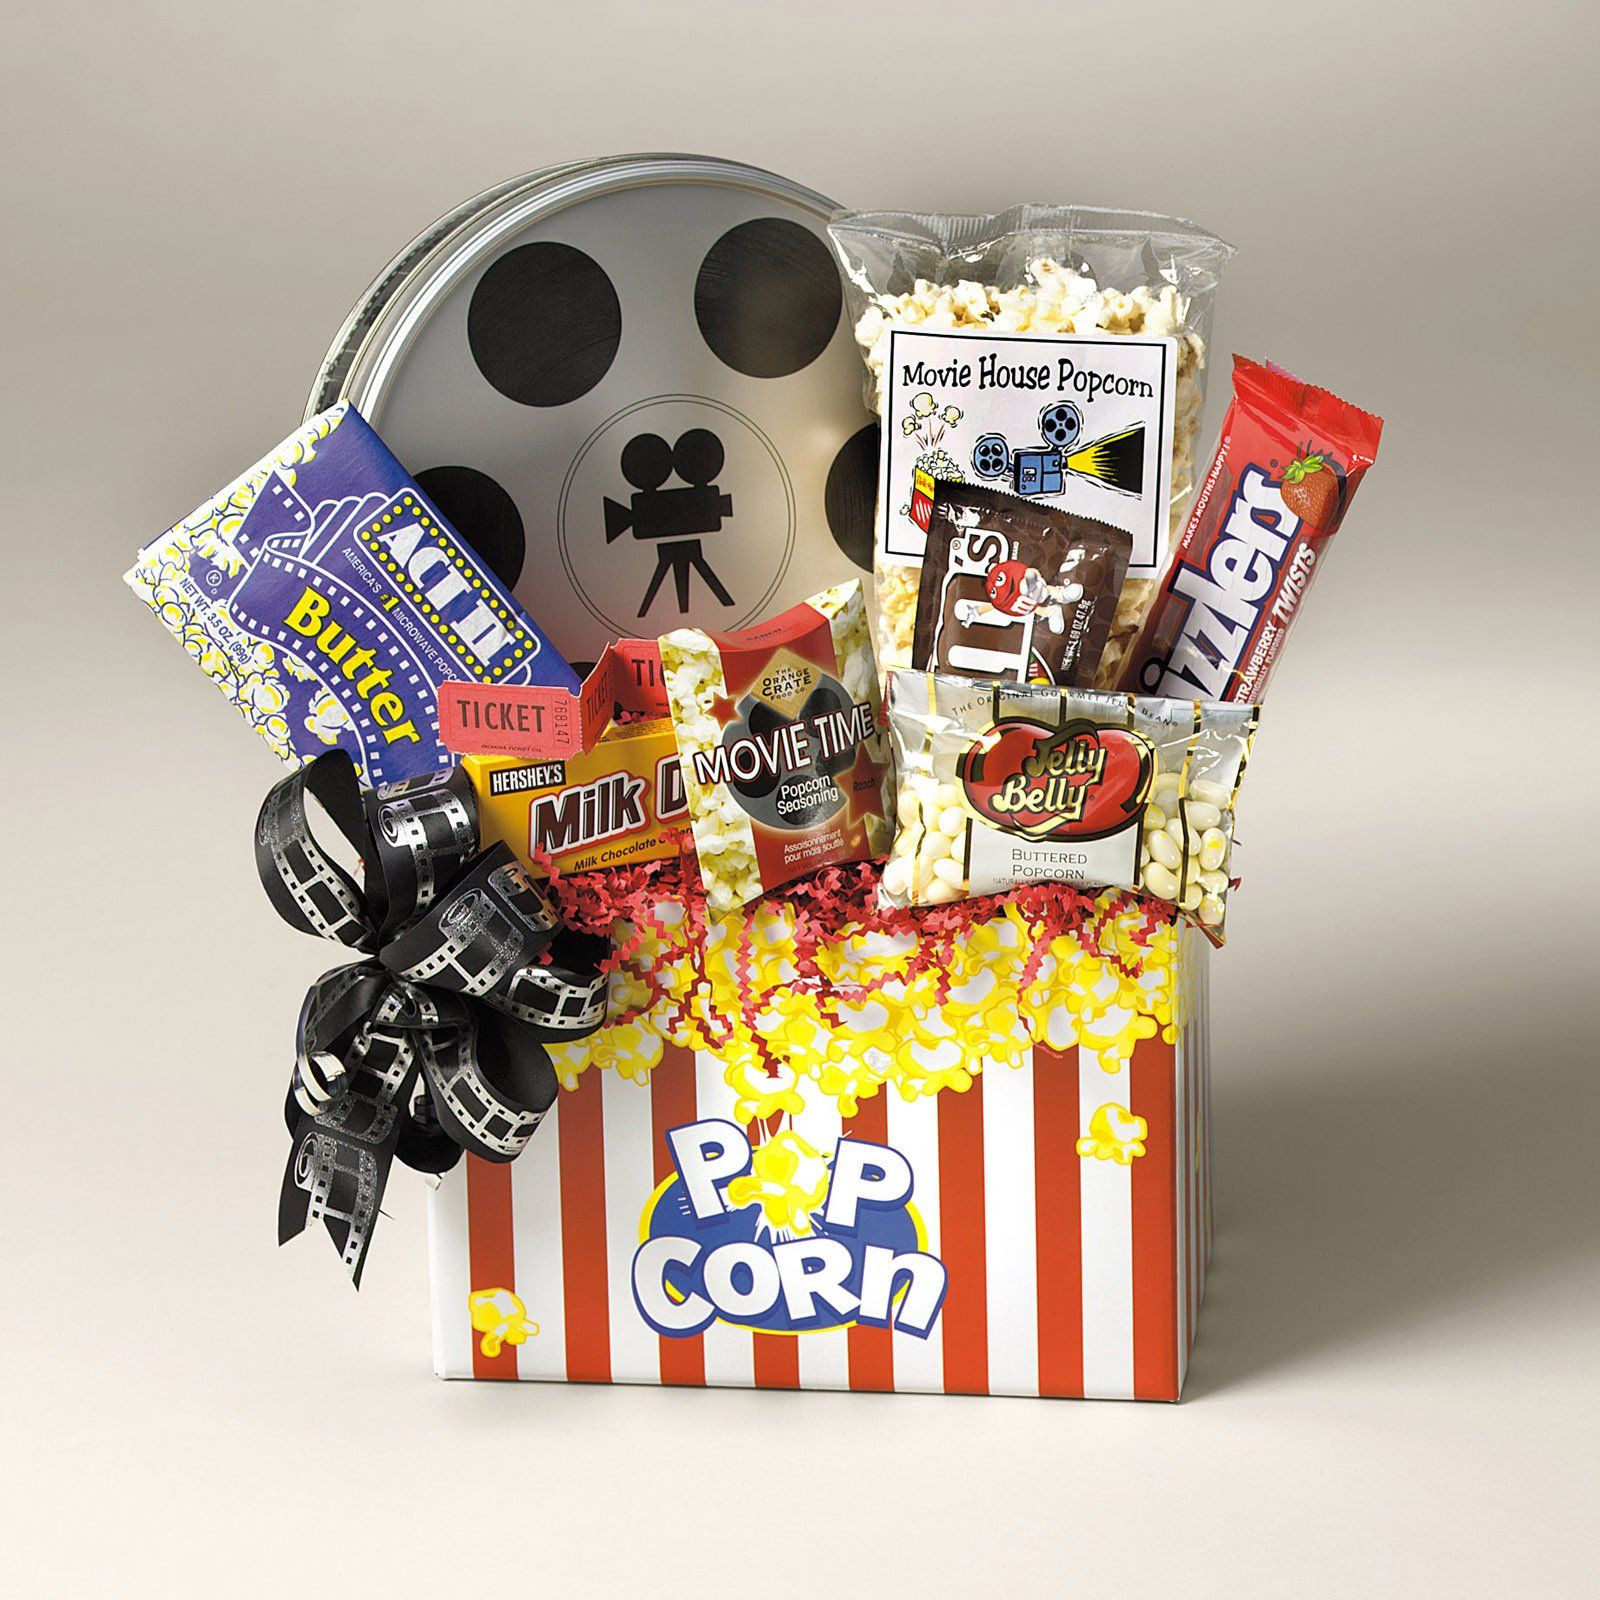 Popcorn Movie Gift Basket Ideas
 13 Lazy Summer Day Movies at Home Popcorn Gift Basket